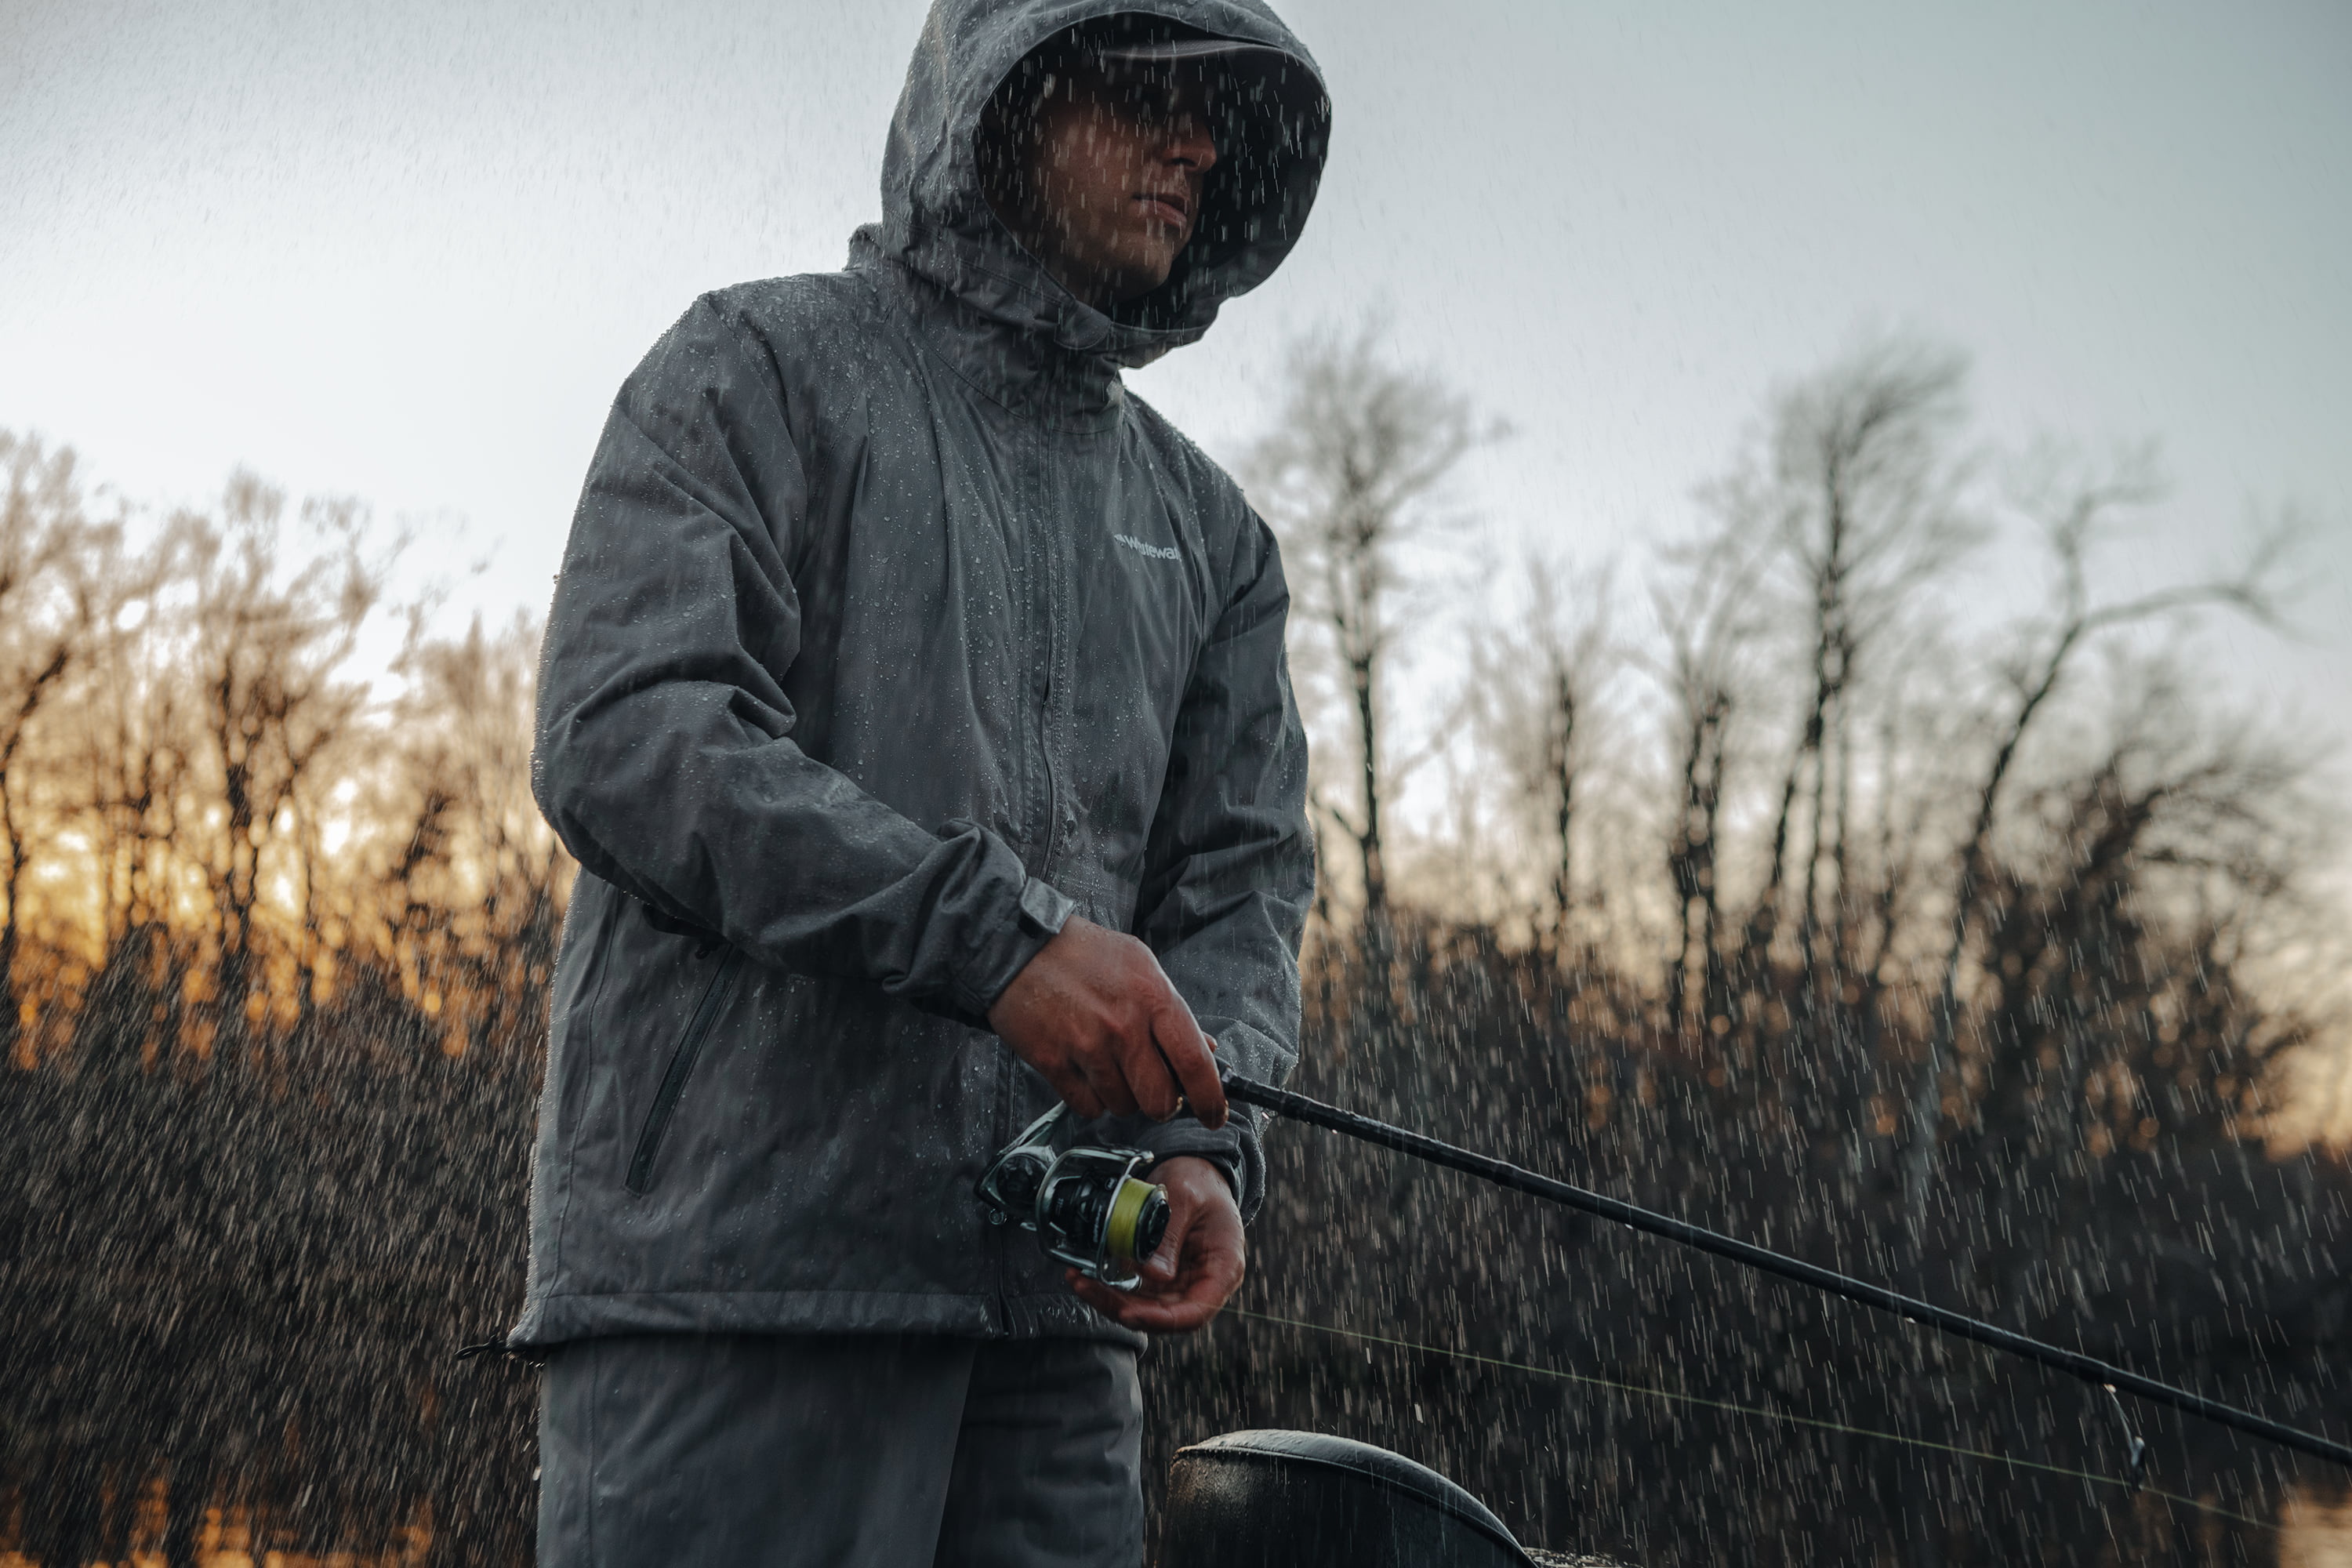 Whitewater Fishing Men's Packable Rain Jacket, Rain Gear for Men